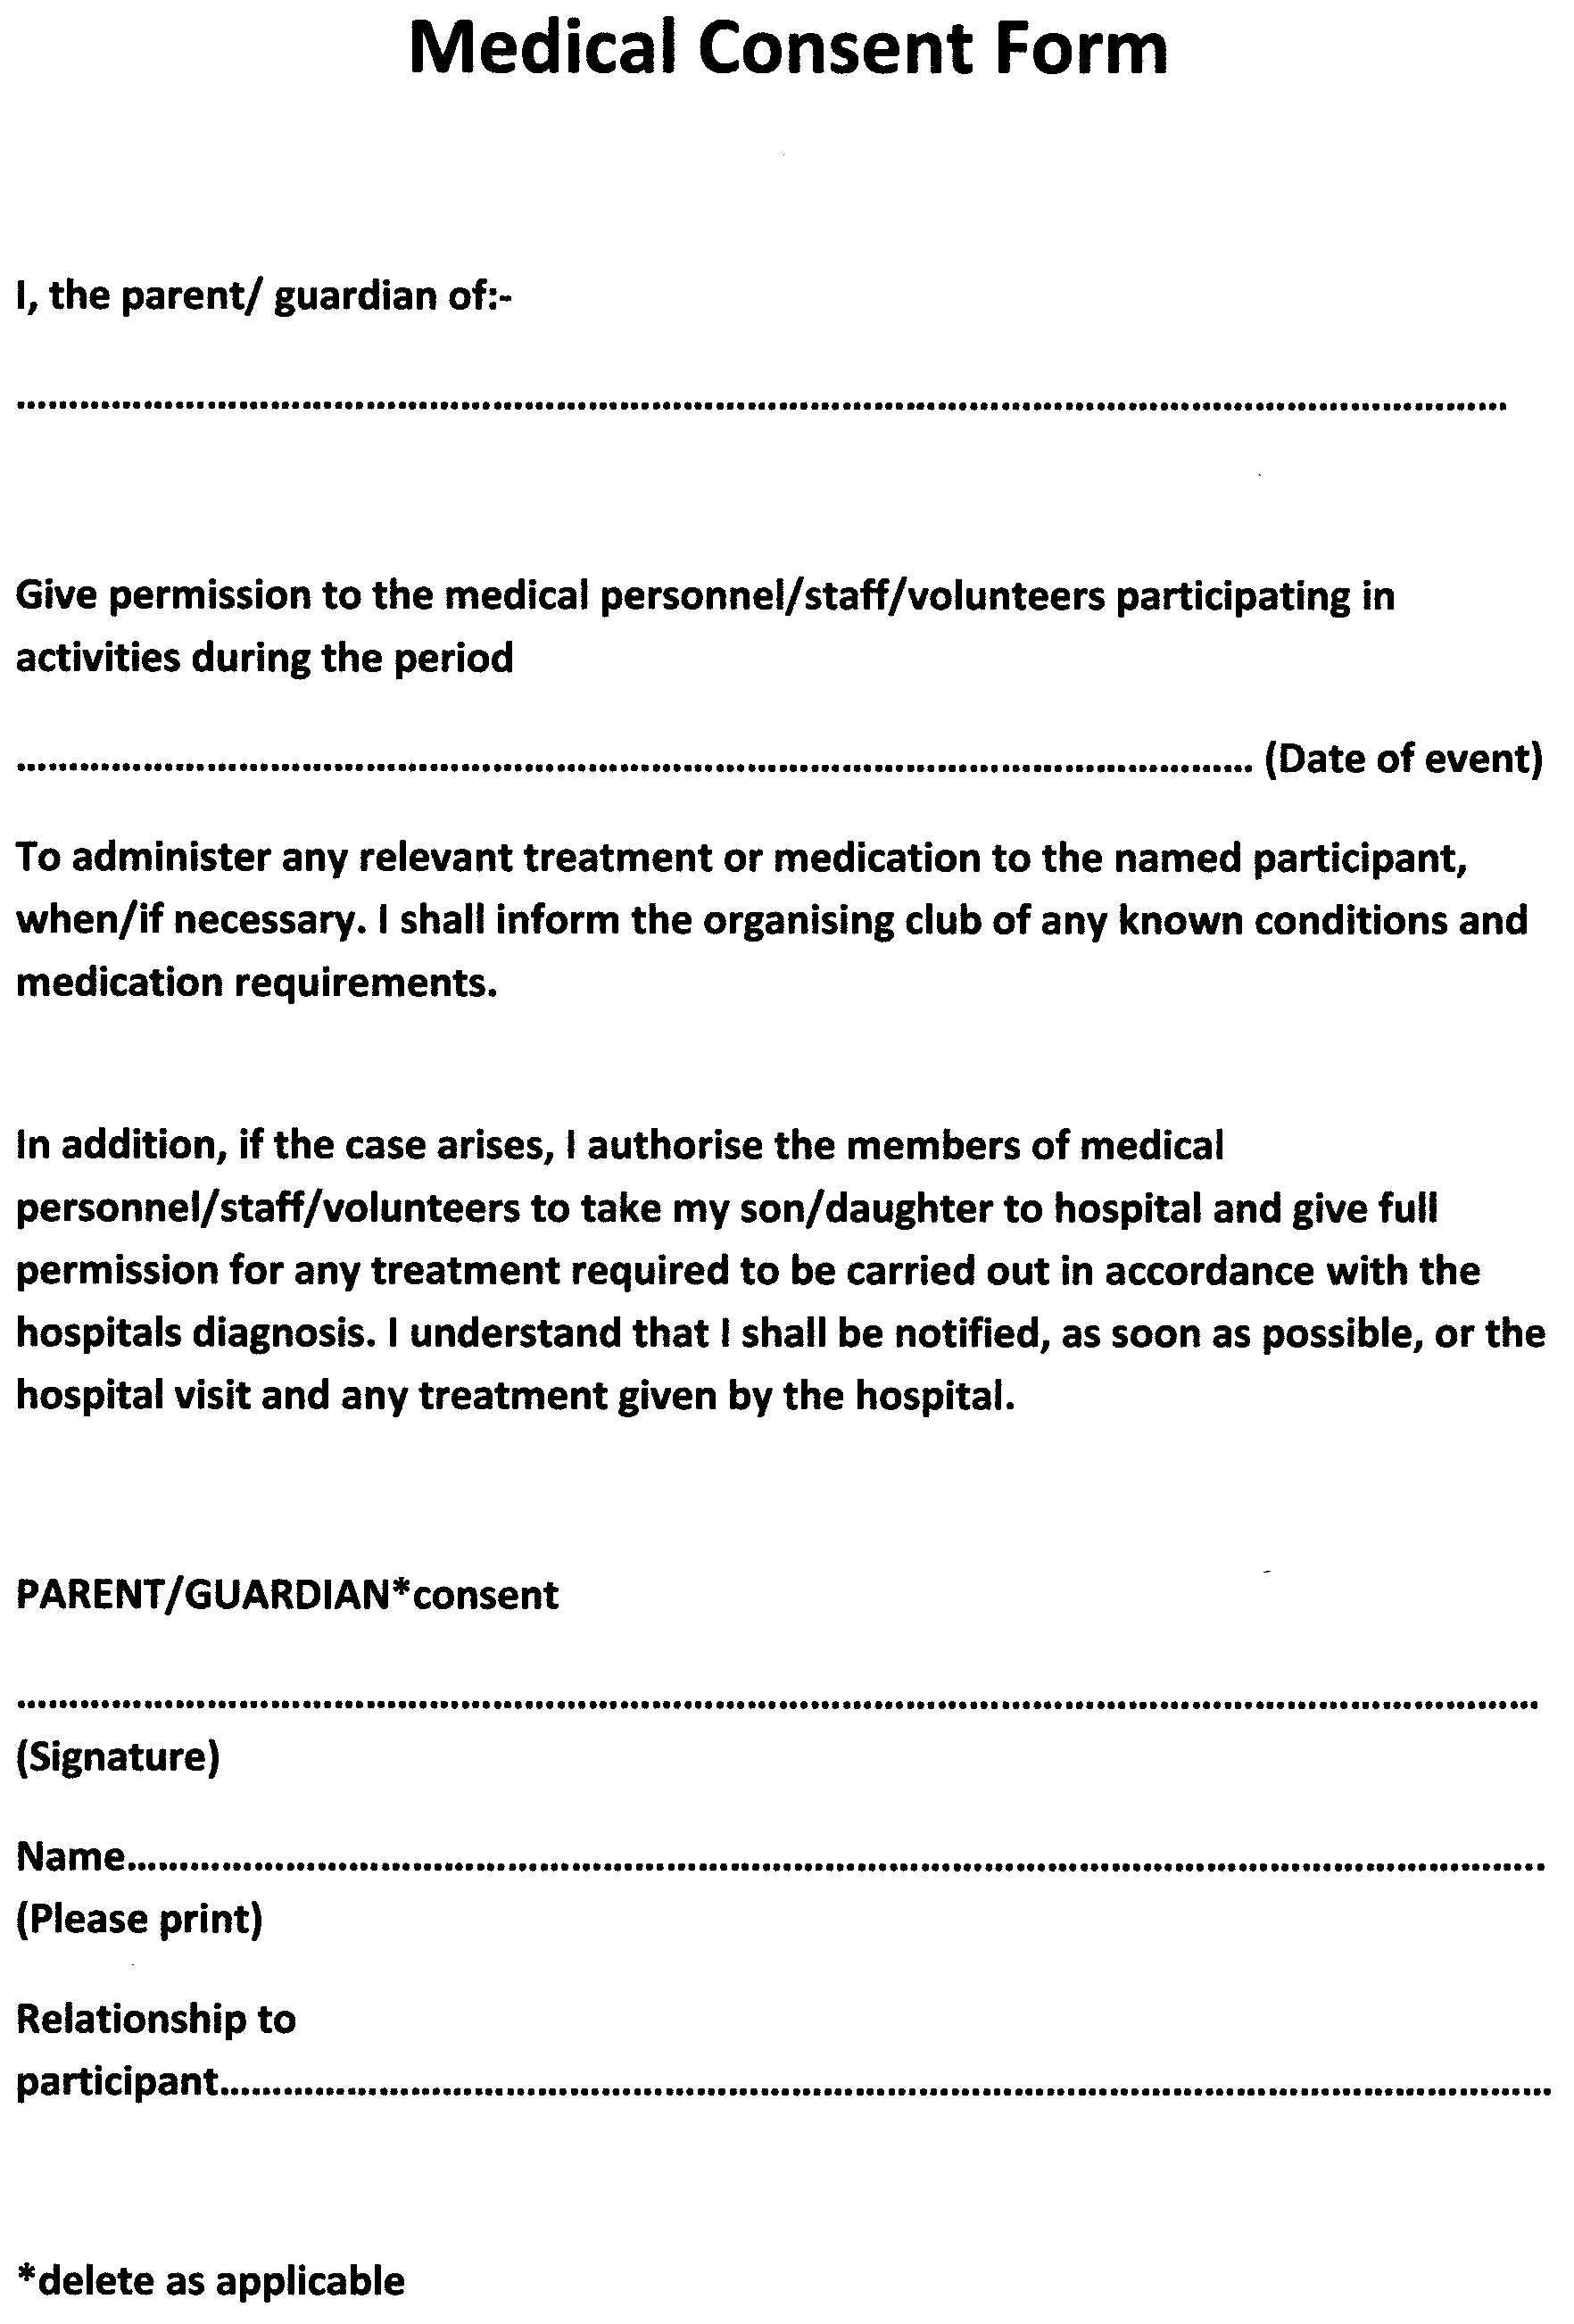 Medical Consent Letter Template - Sample Medical Consent form Sarahepps